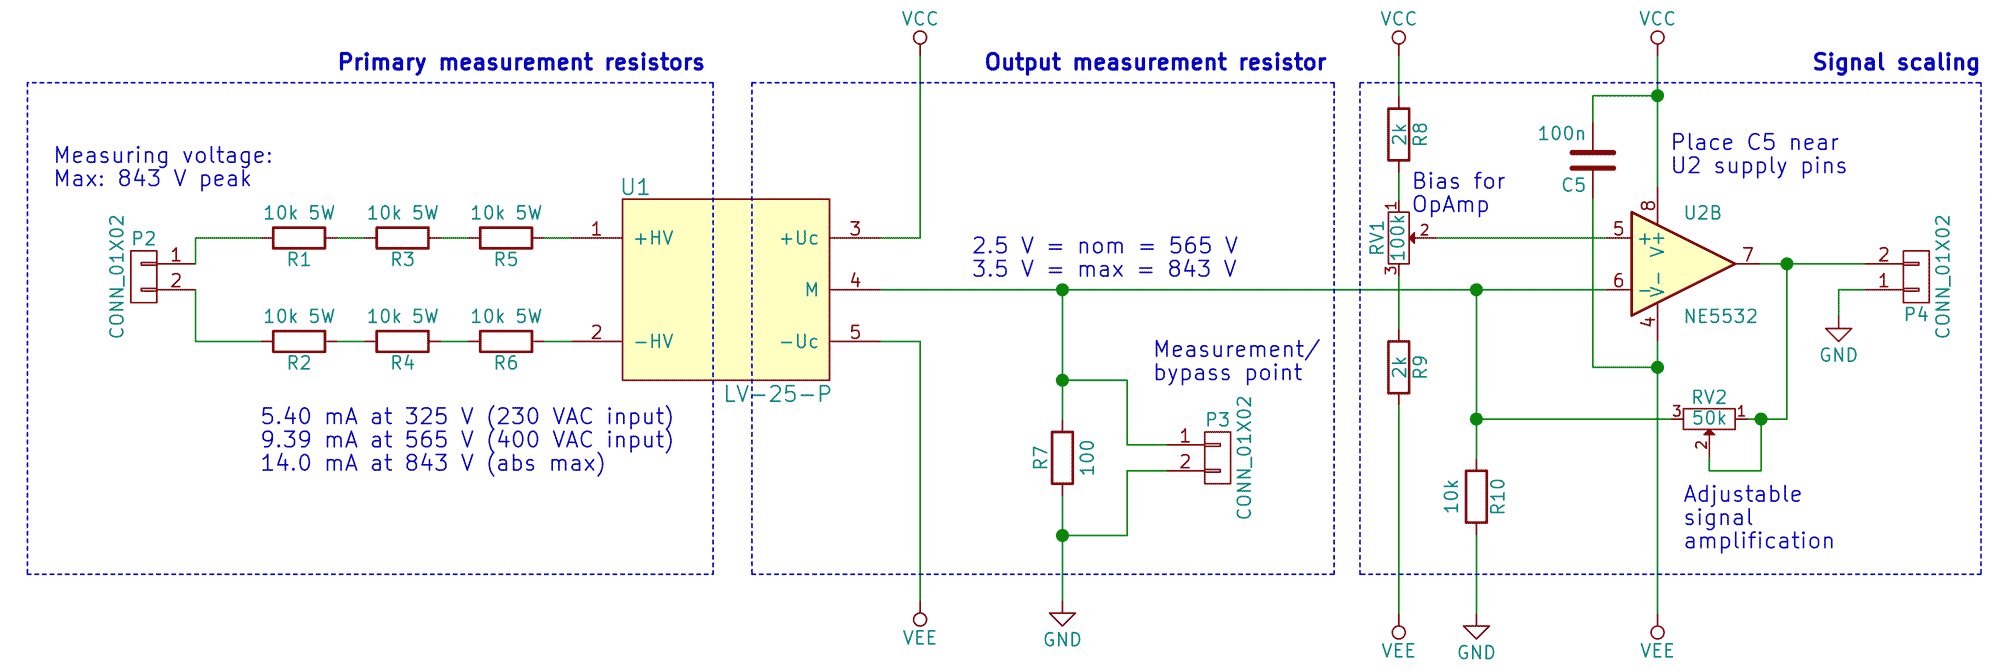 Isolated AC voltage sensing using LV25-P